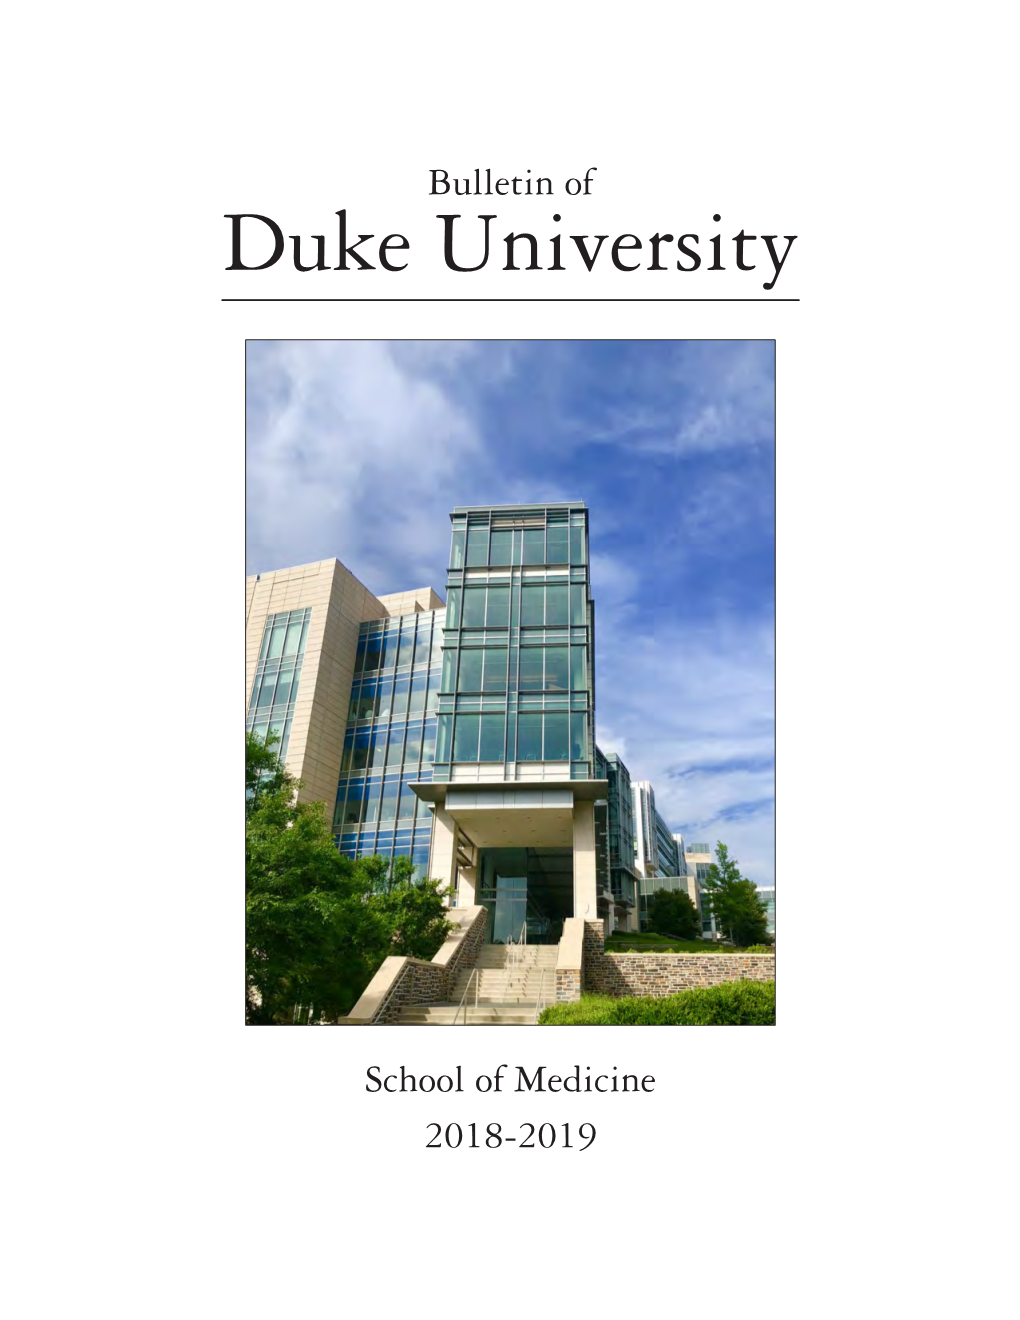 2018-19 School of Medicine Bulletin